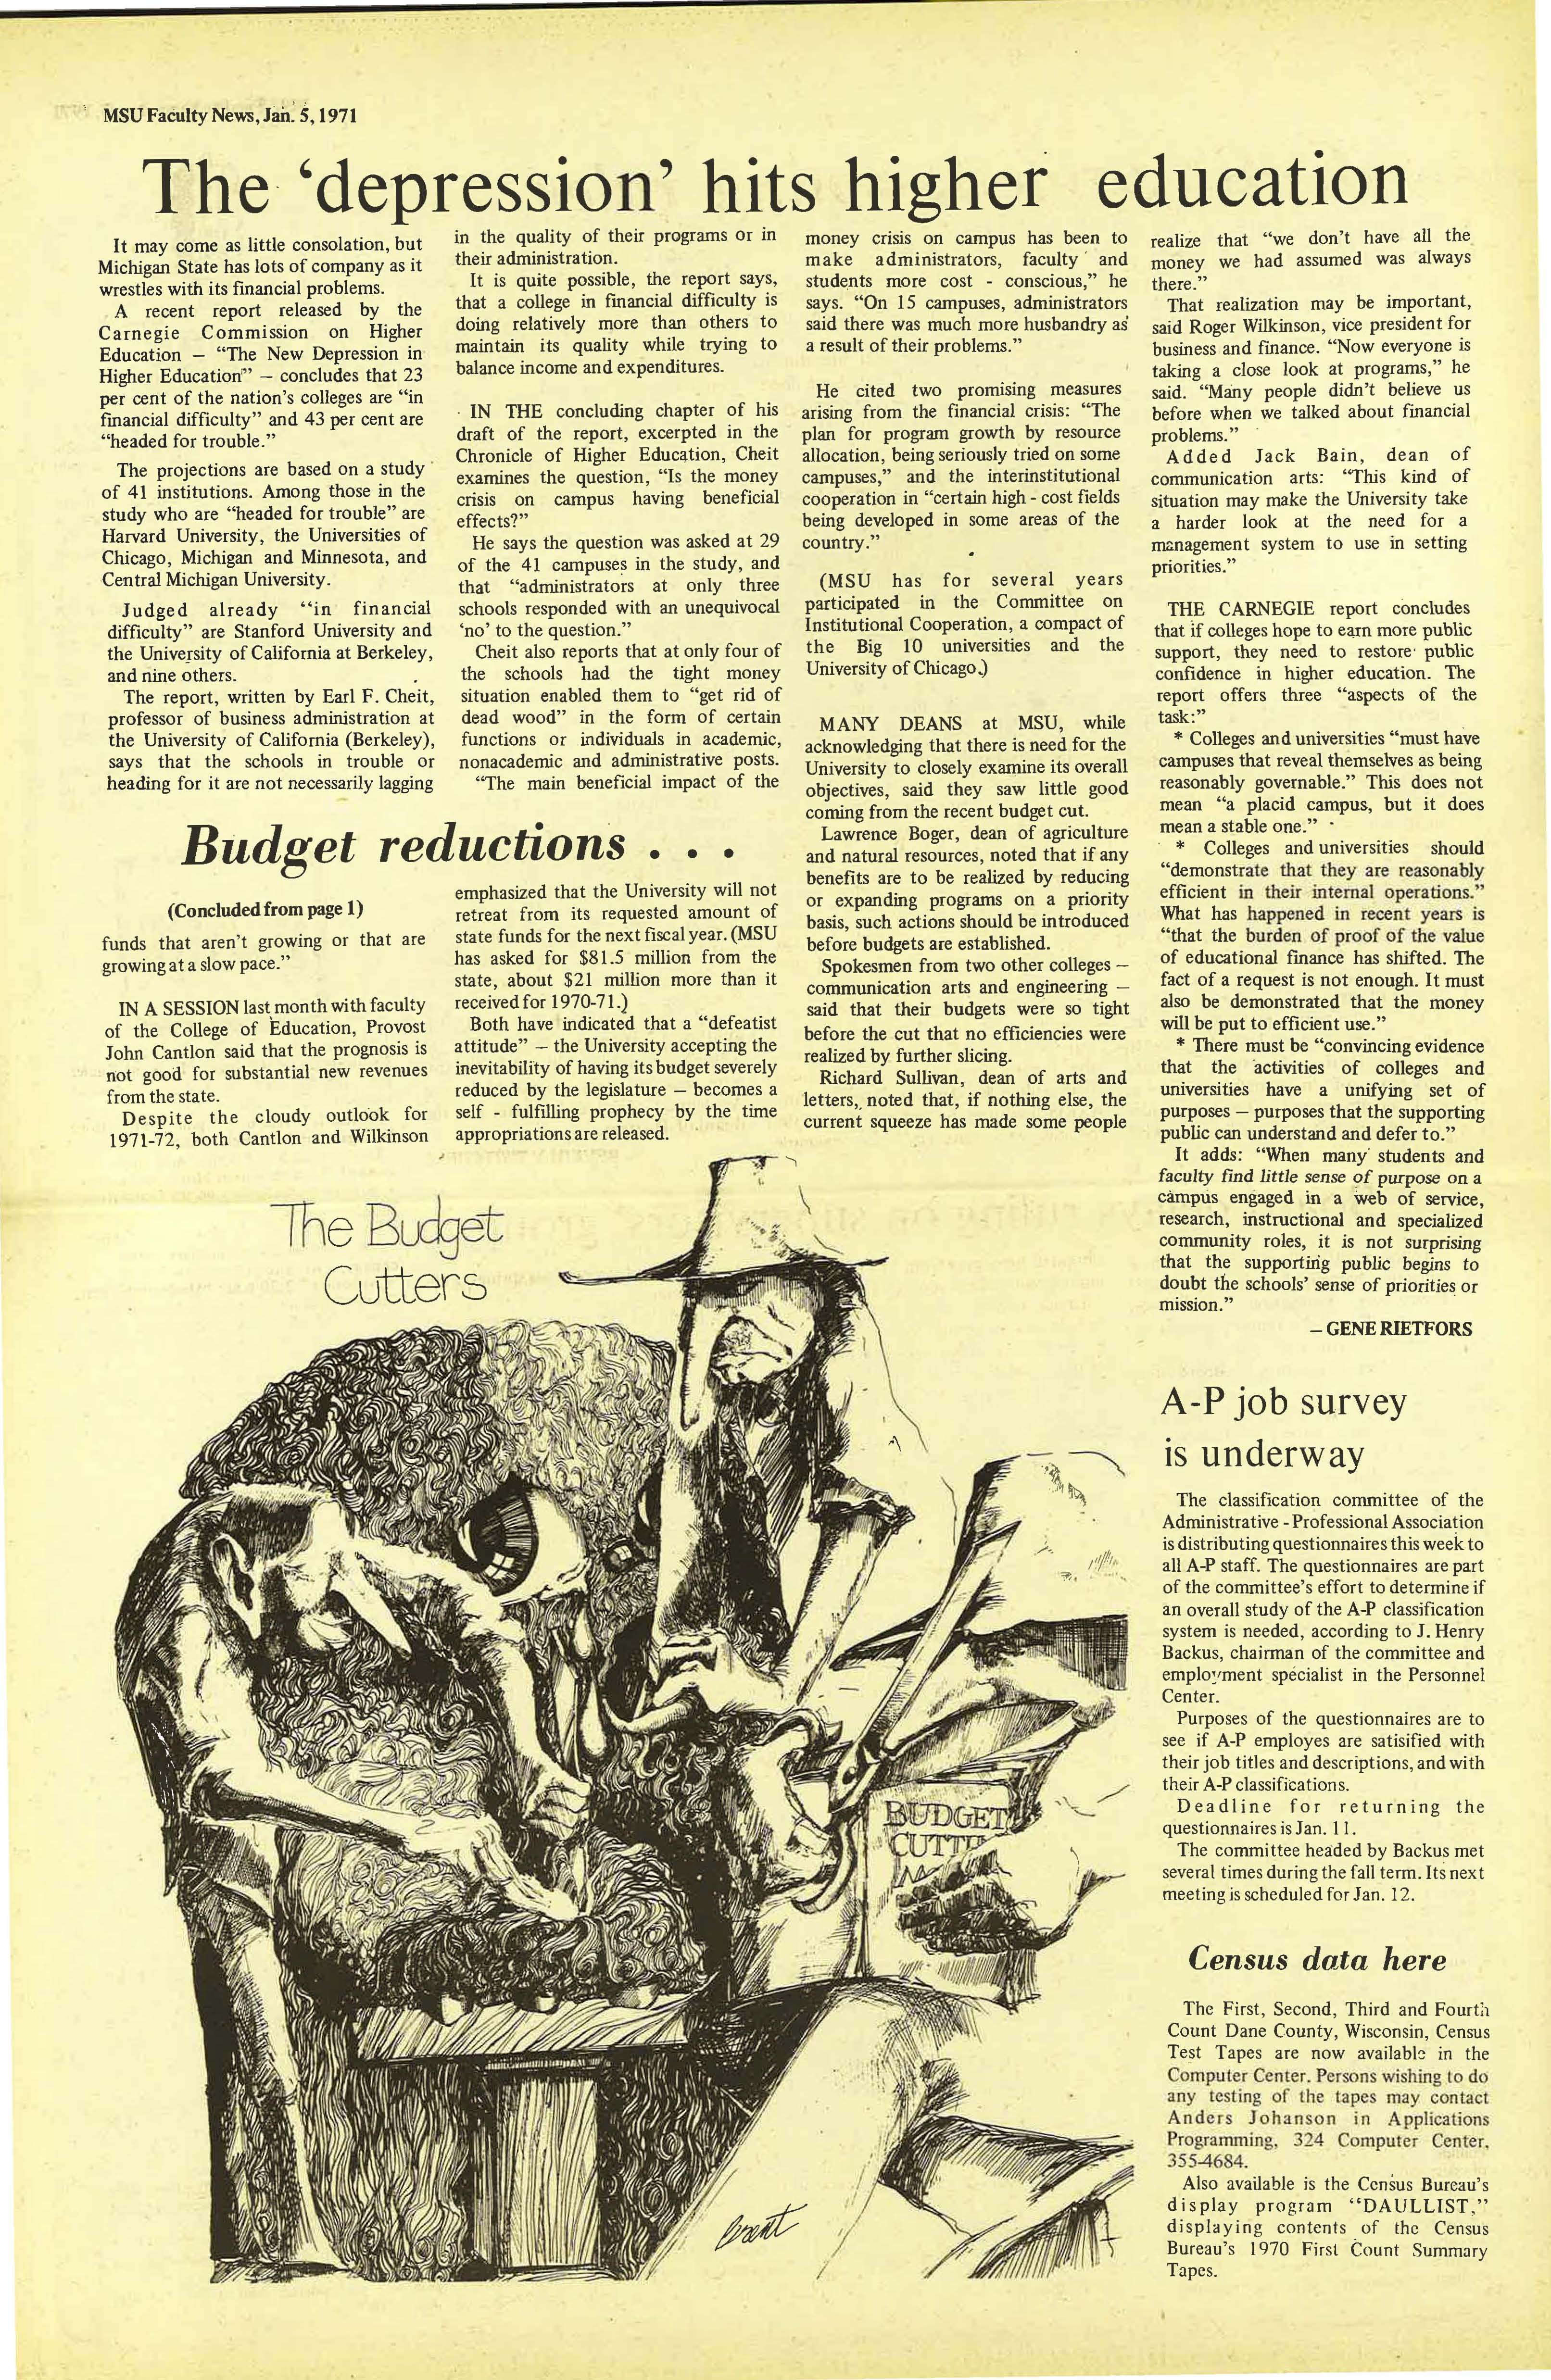 MSU News Bulletin, vol. 3, No. 9, November 18, 1971